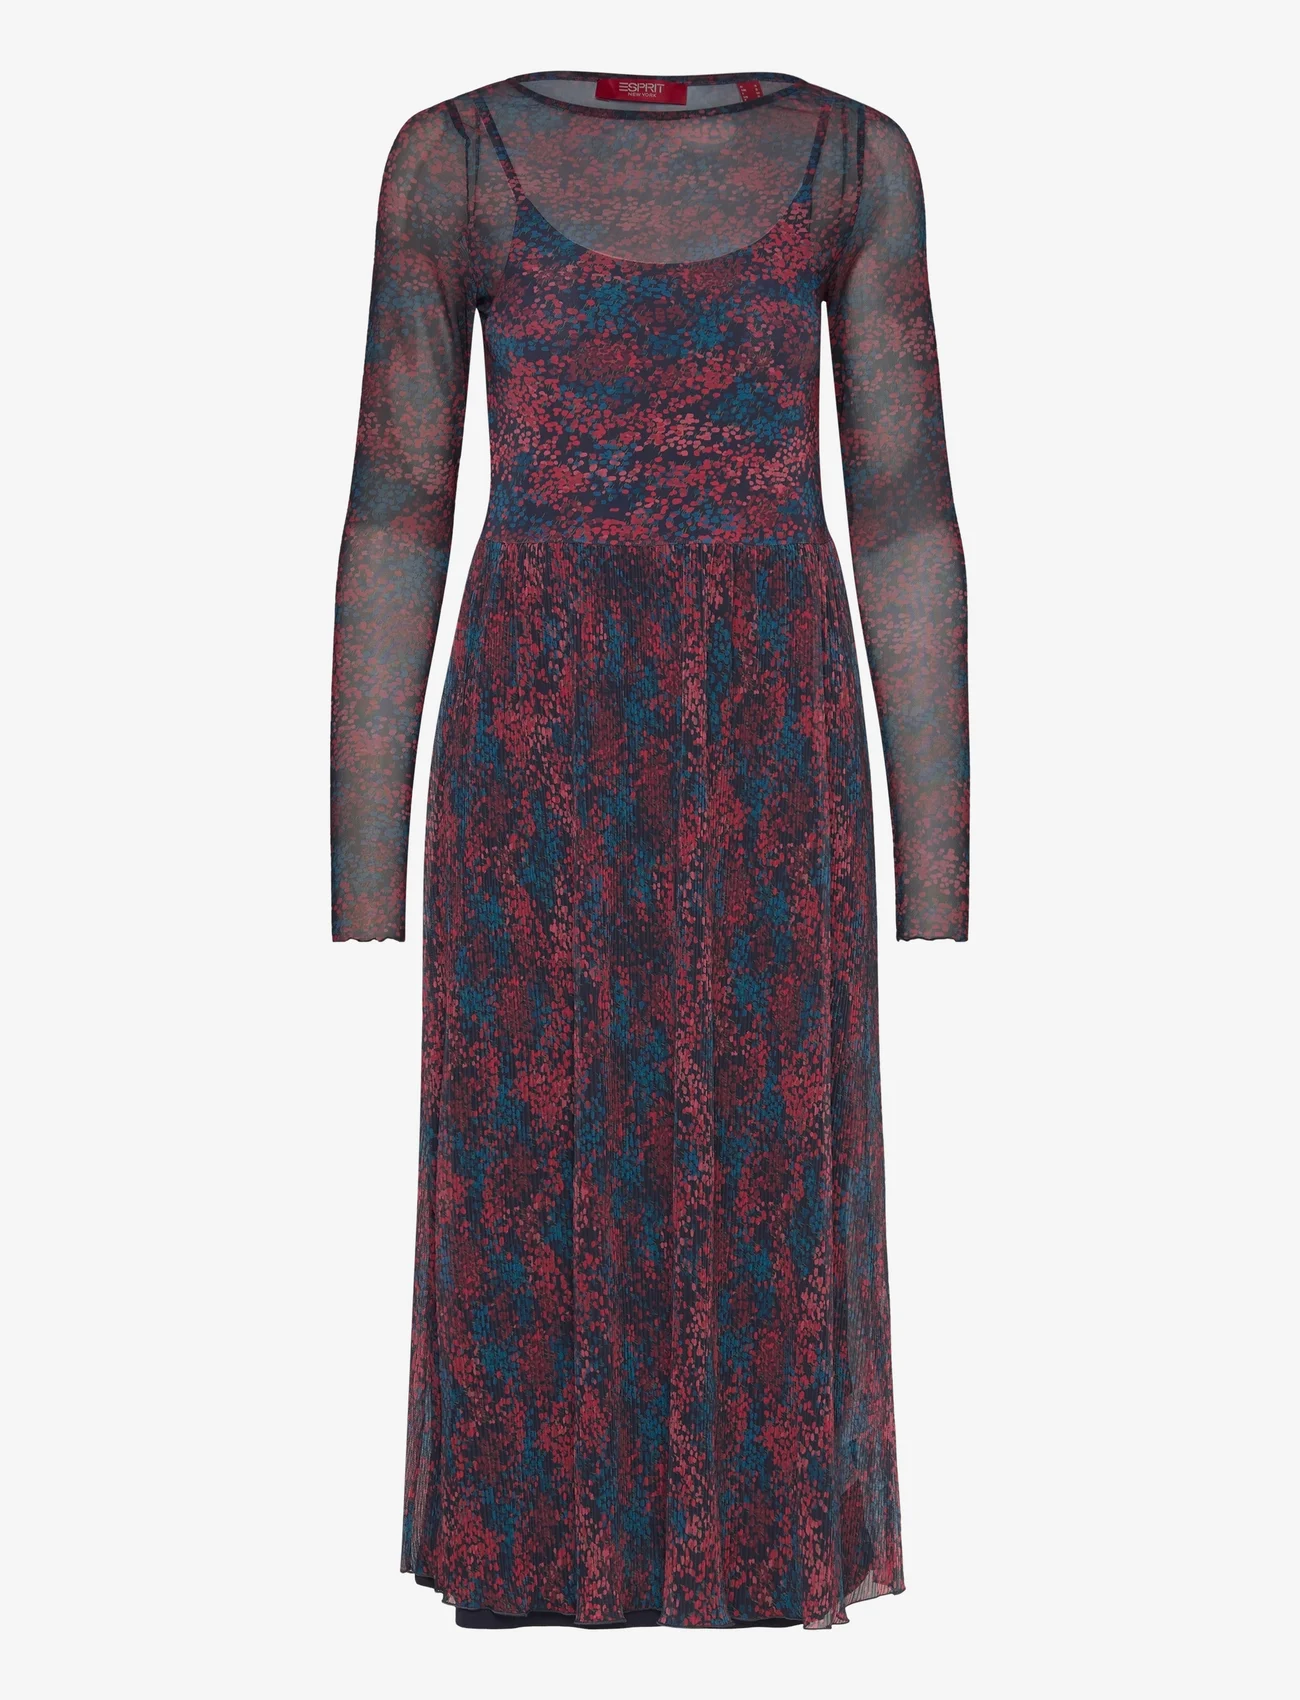 Esprit Casual - Dresses knitted - sommerkleider - dark blue - 0